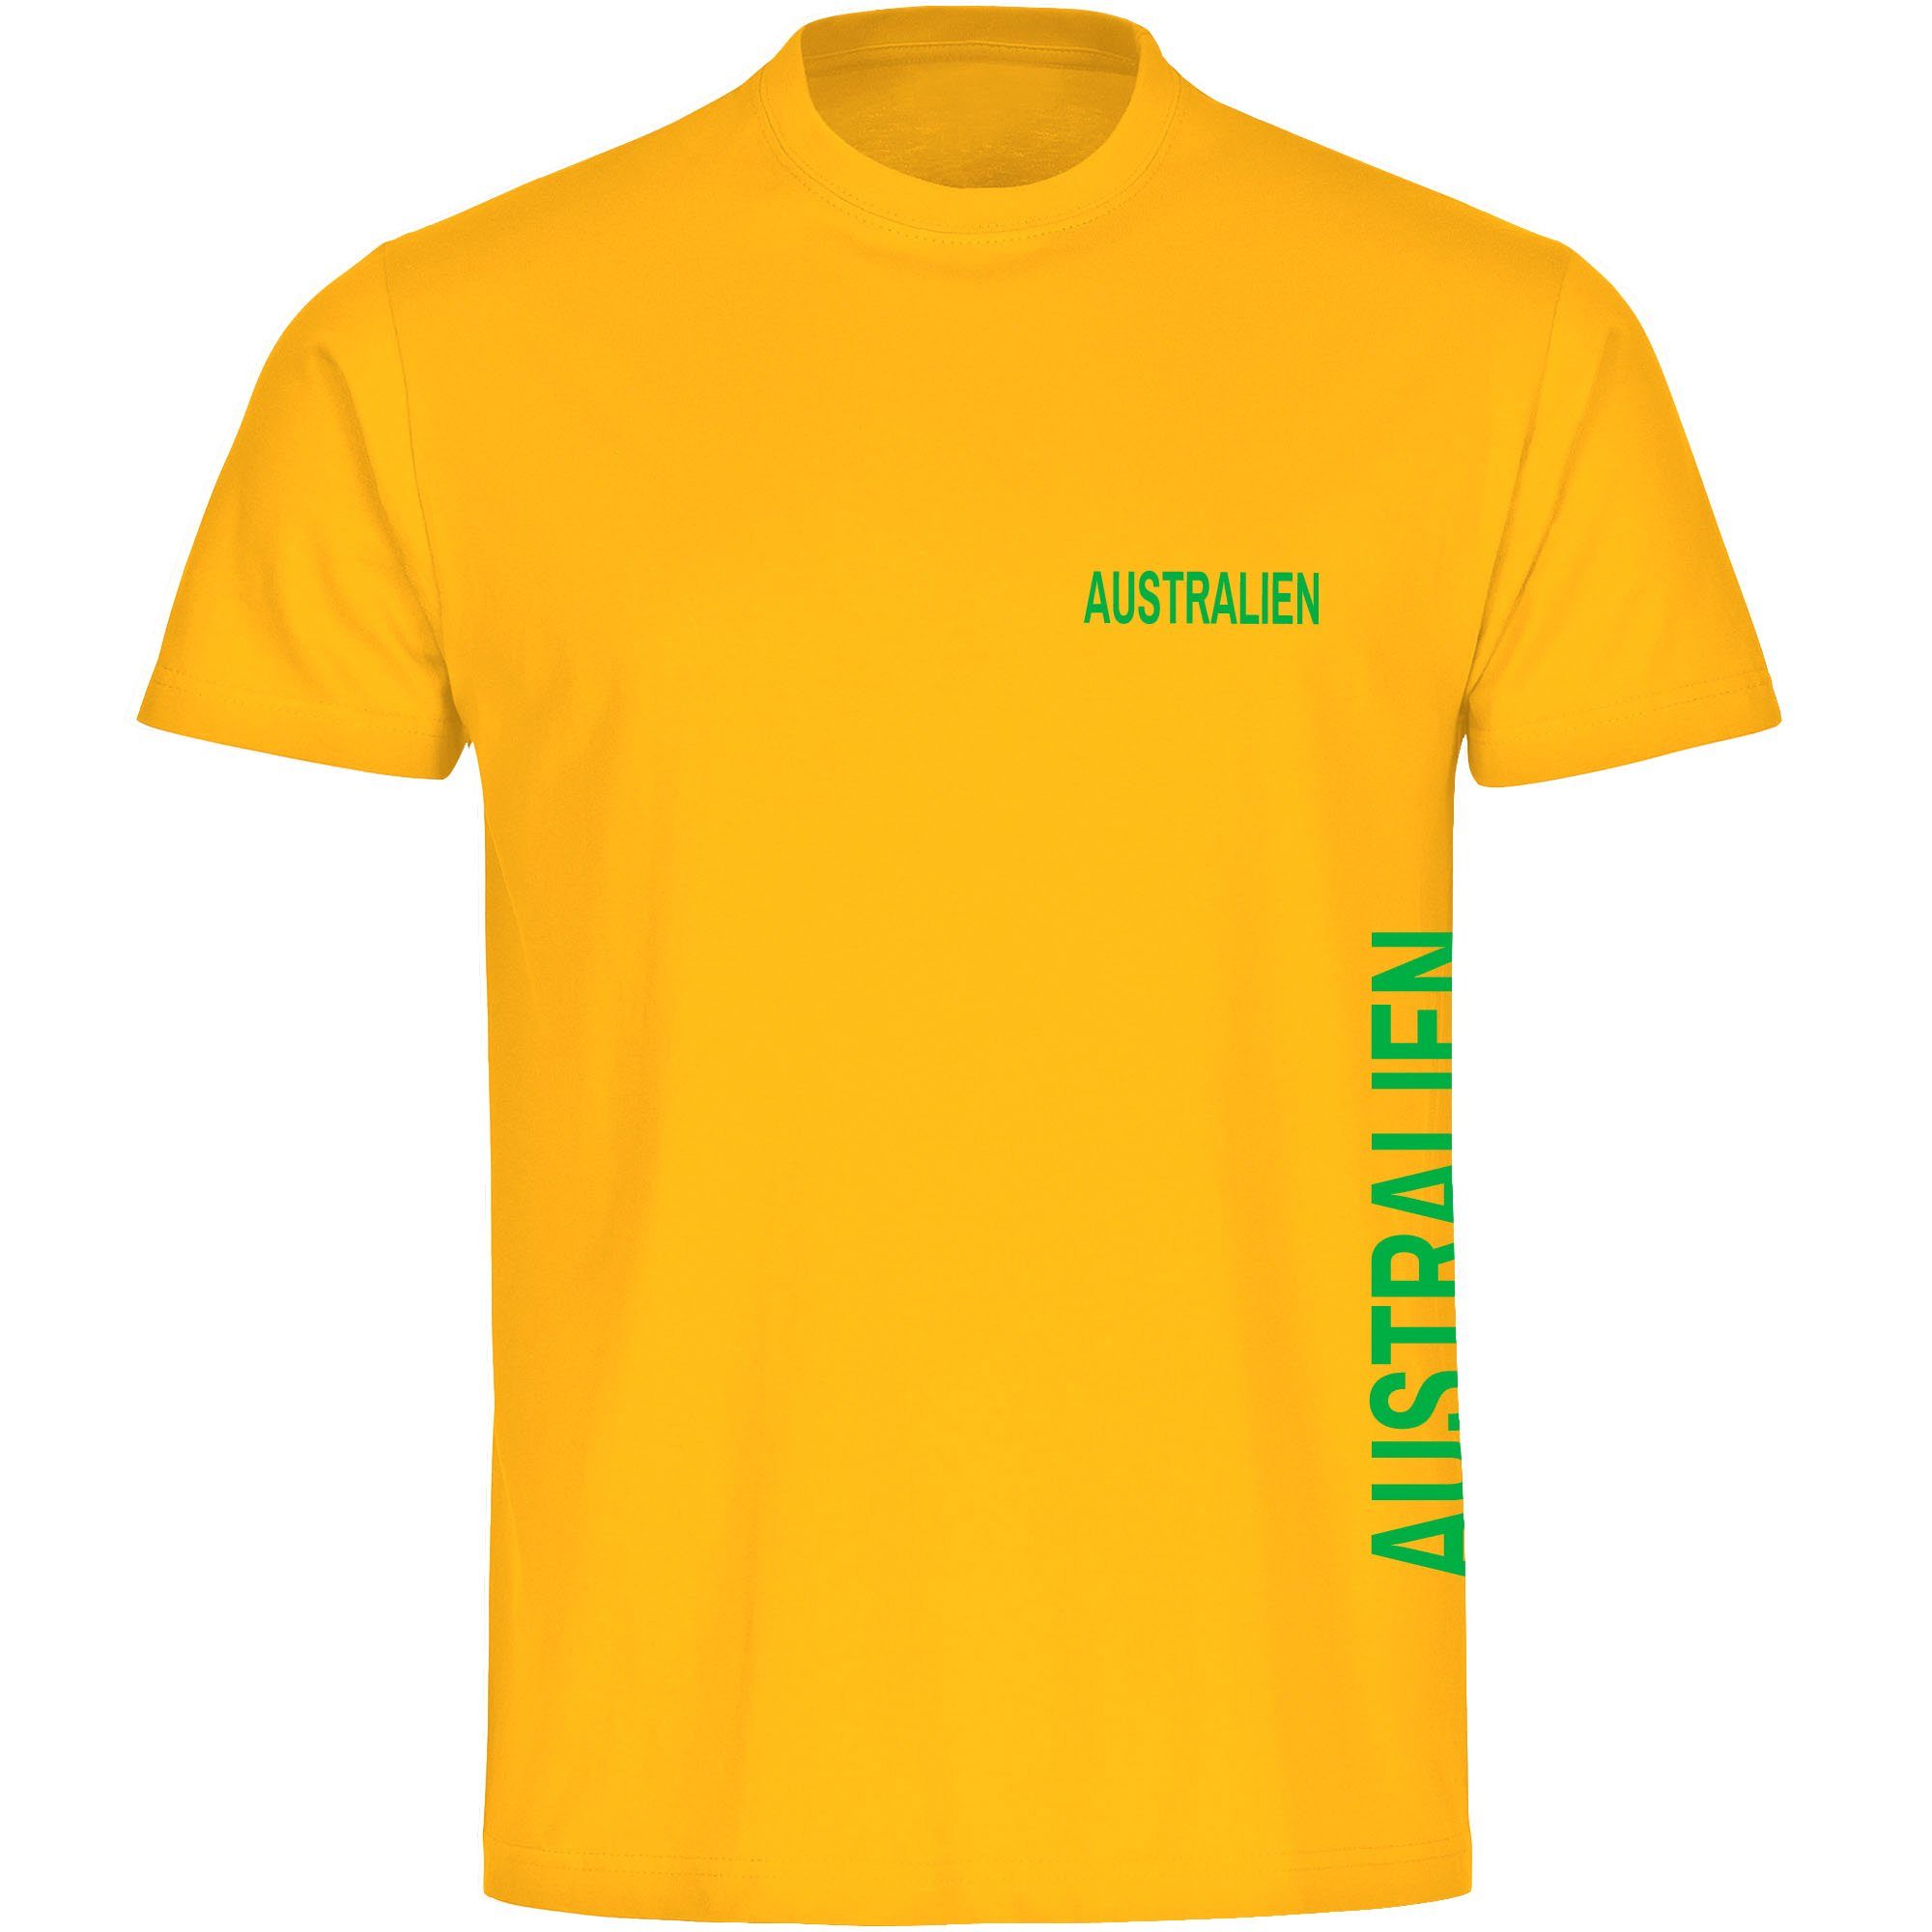 multifanshop T-Shirt Kinder Australien - Brust & Seite - Boy Girl